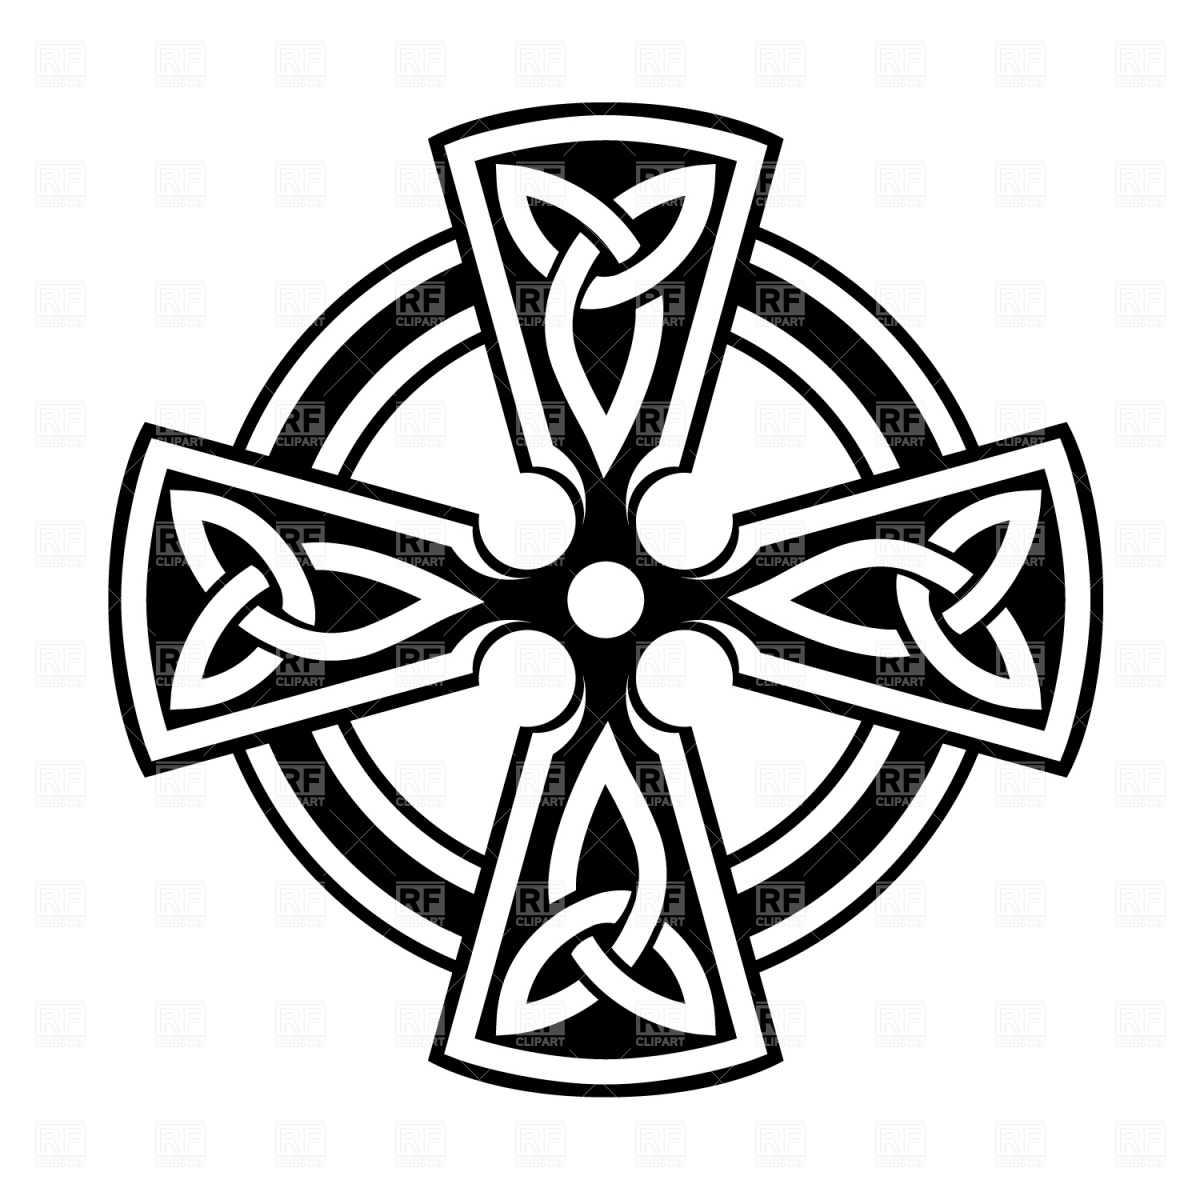 Celtic Cross Design Elements Download Royalty Free Vector Clip Art